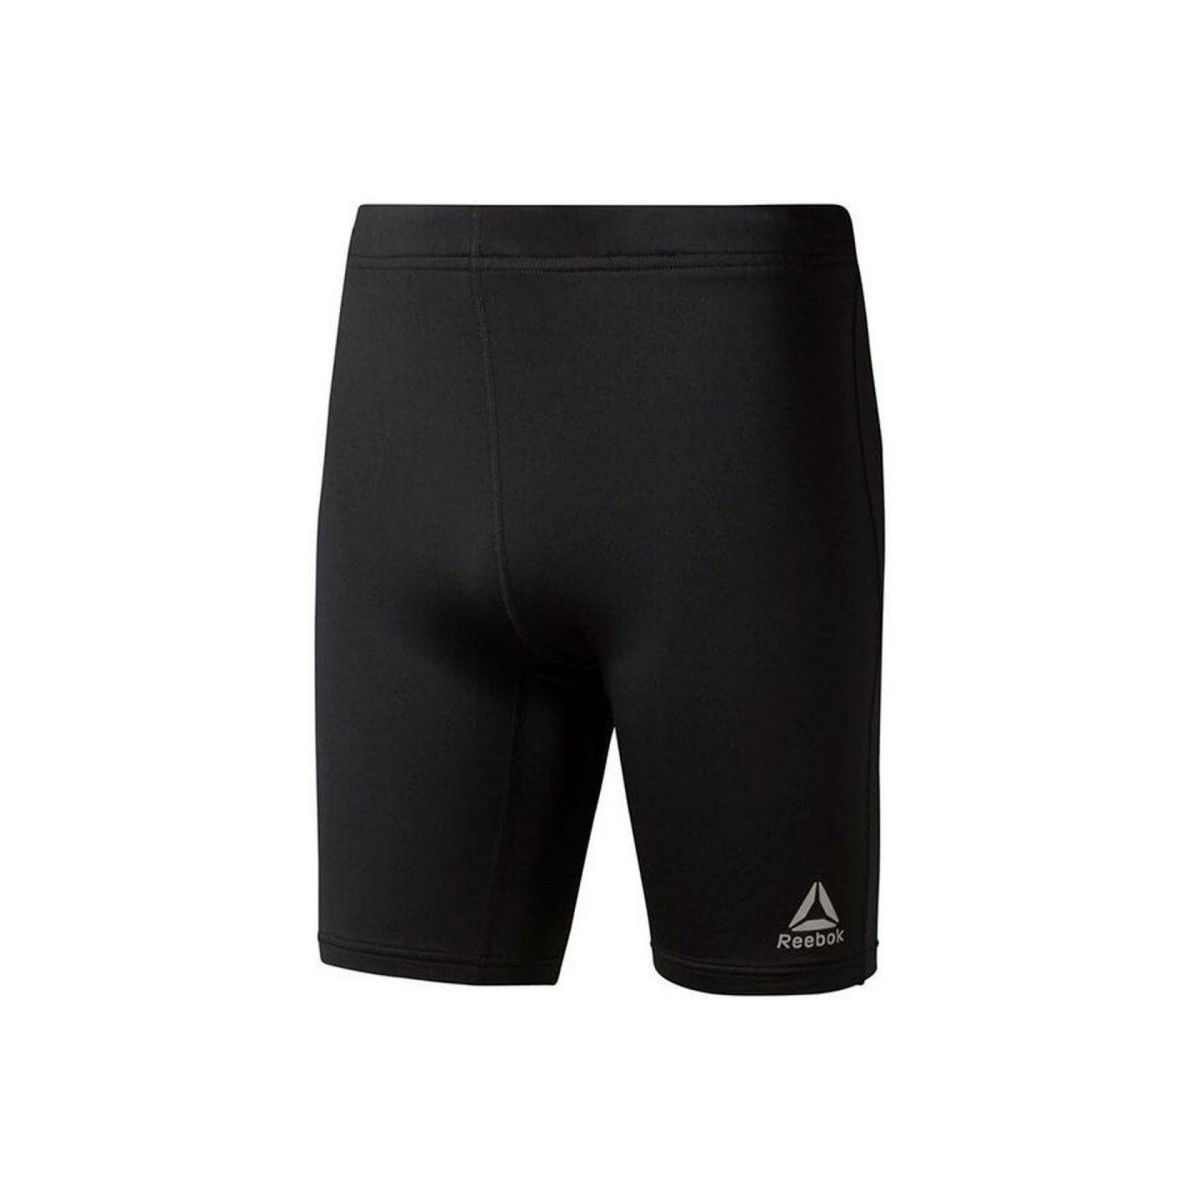 Textil Mulher Shorts / Bermudas Reebok Sport Mesh Boxer Briefs 3 Pairs Preto